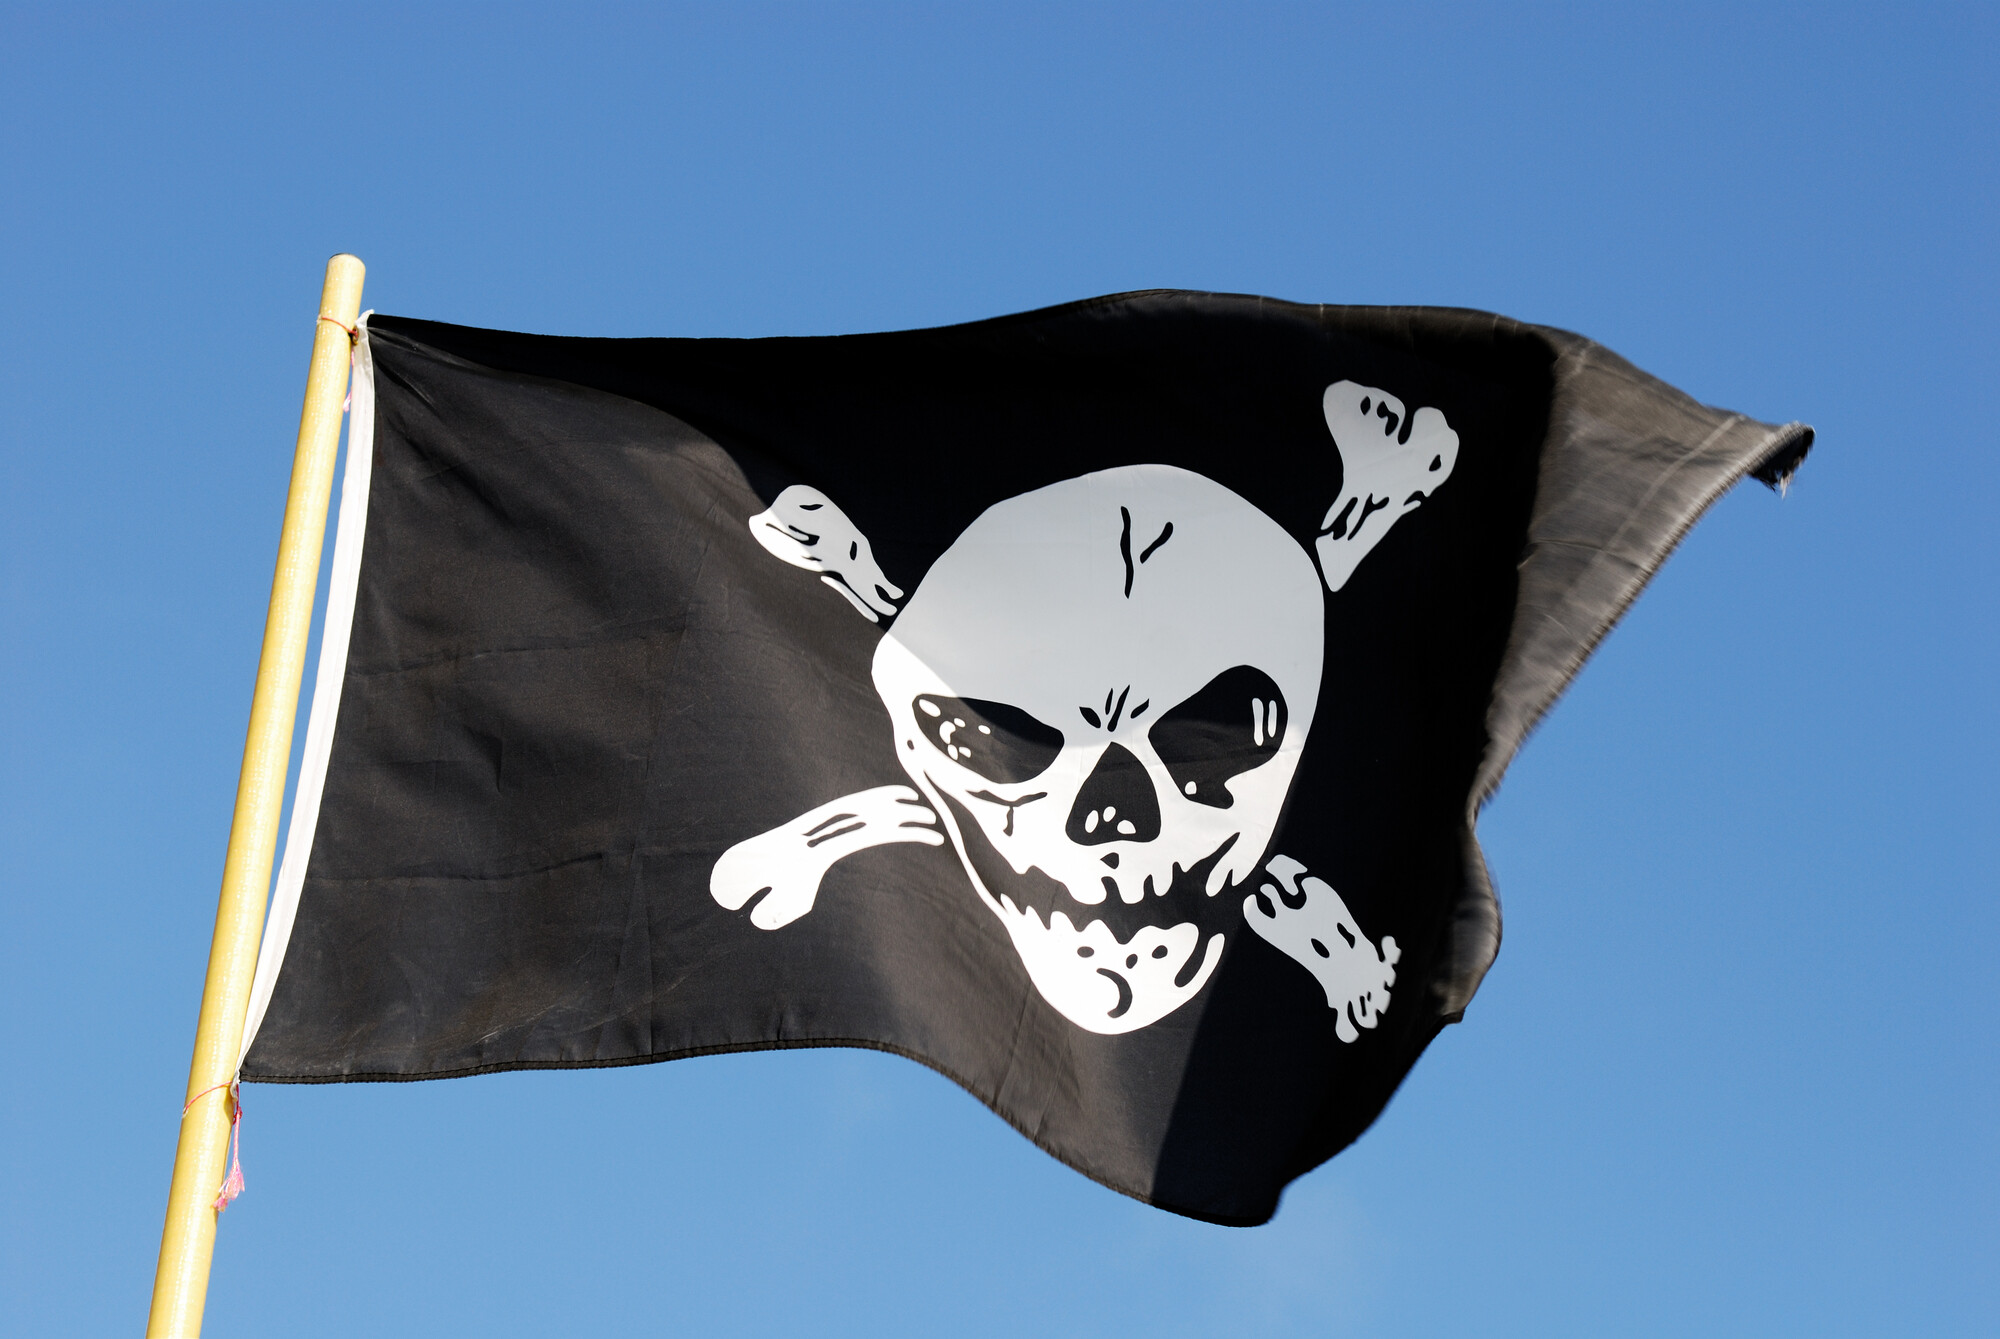 Флаг пиратов Сомали. Пиратский флаг Сомали. Пиратский флаг в виде кота. Роджер флаг пиратов. Черный флаг 1